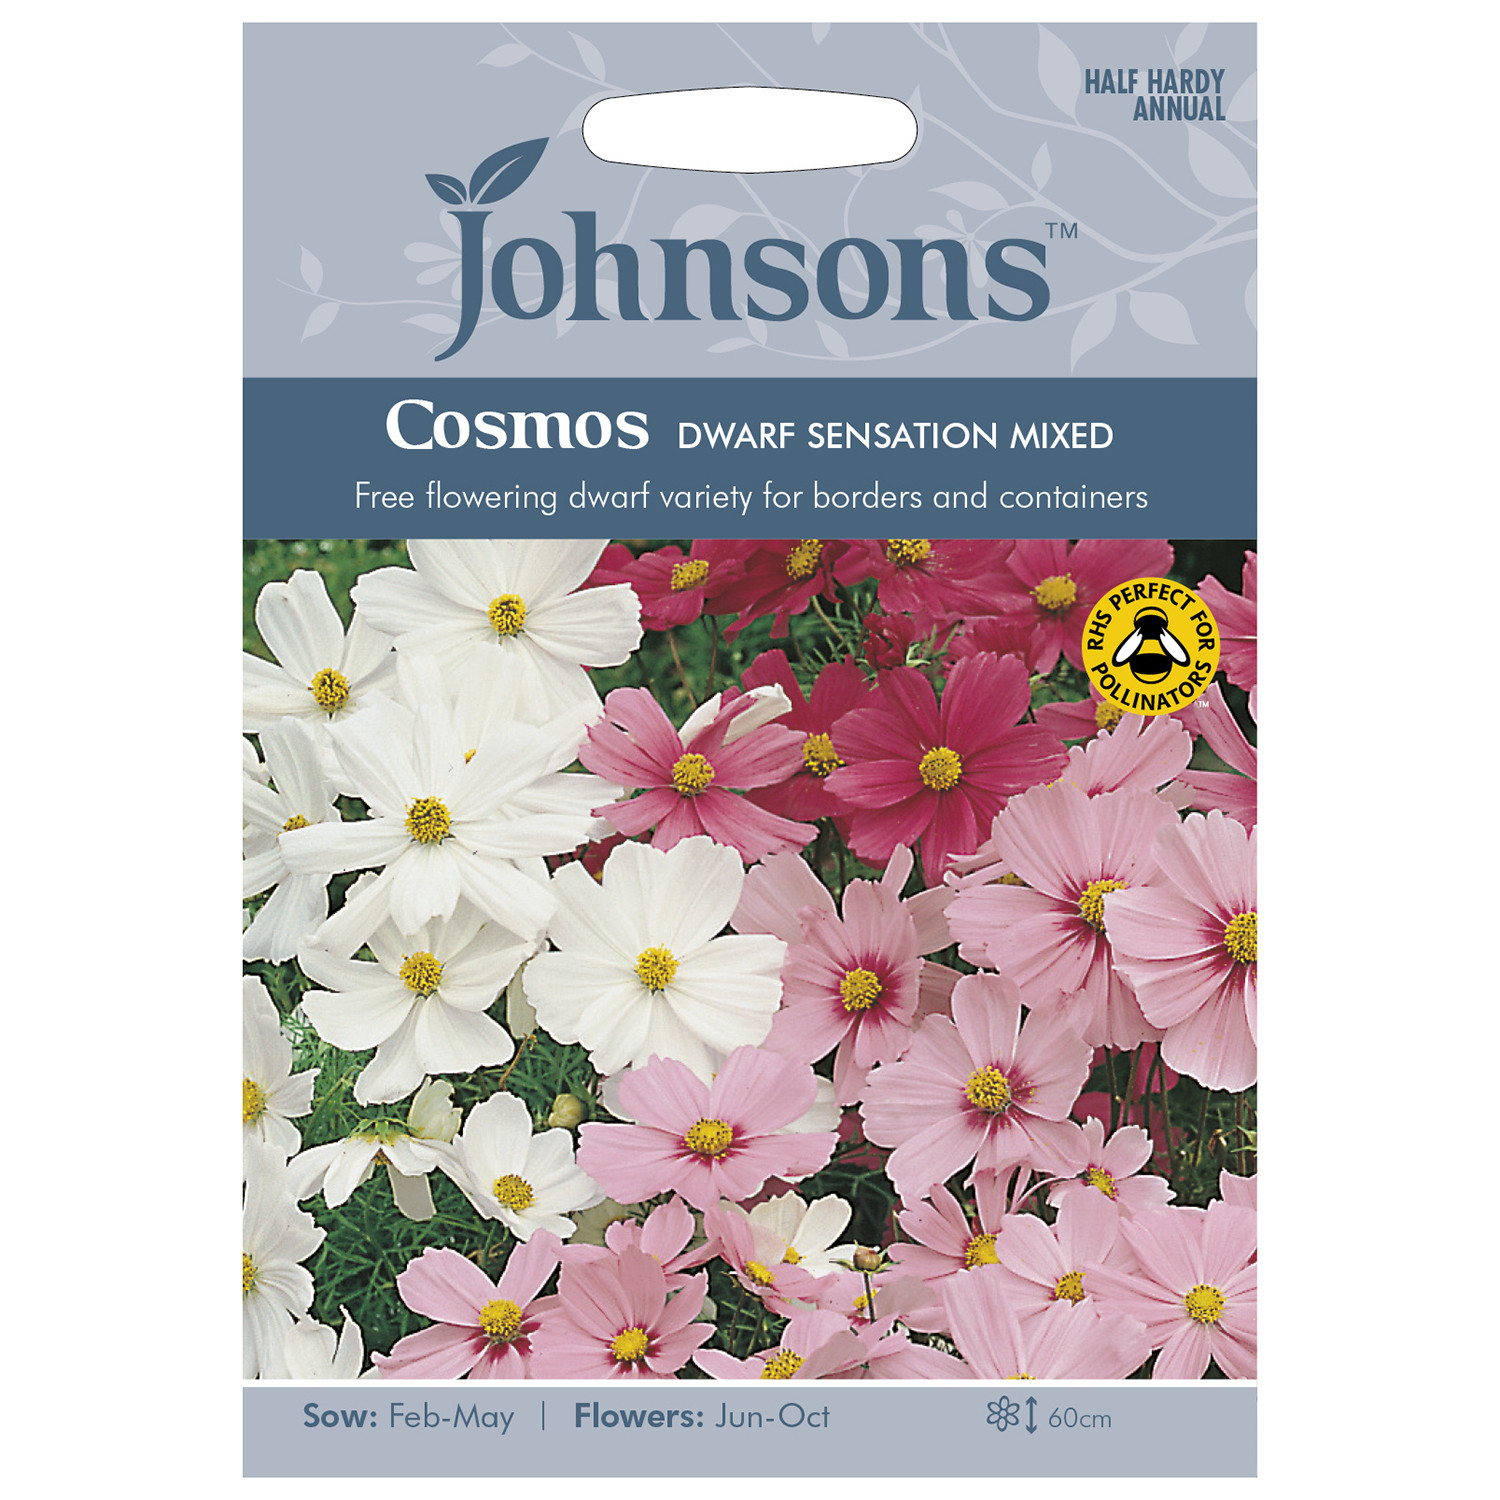 Johnsons Cosmos Dwarf Sensation Mixed Flower Seeds Image 2